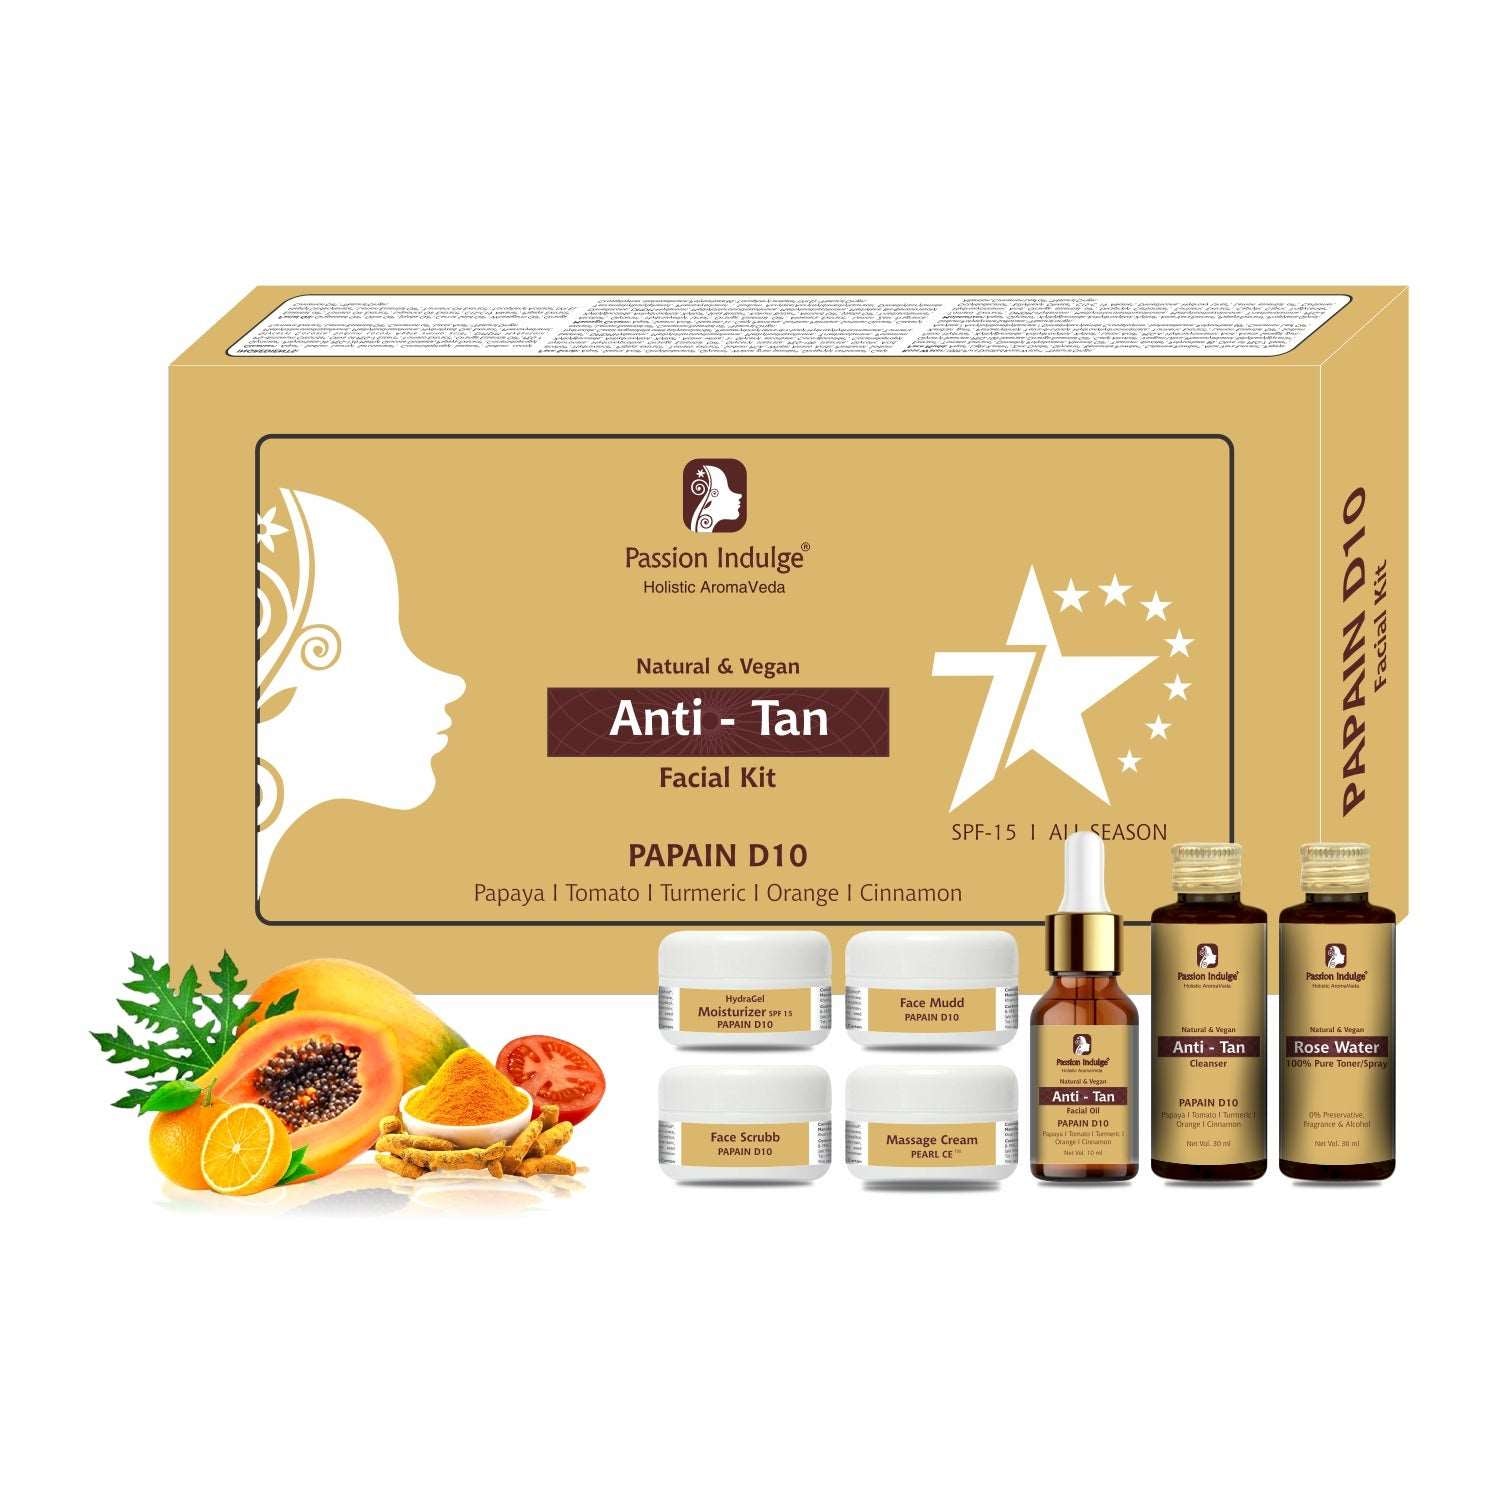 Papain D10 Natural 7 Star Facial Kit For Reduces Tan | Improves Tone & Texture | SPF 15 With Turmeric, Orange, Papaya, Tomato,Cinnamon | All Skin Type | Home Facial Kit | Natural & Vegan